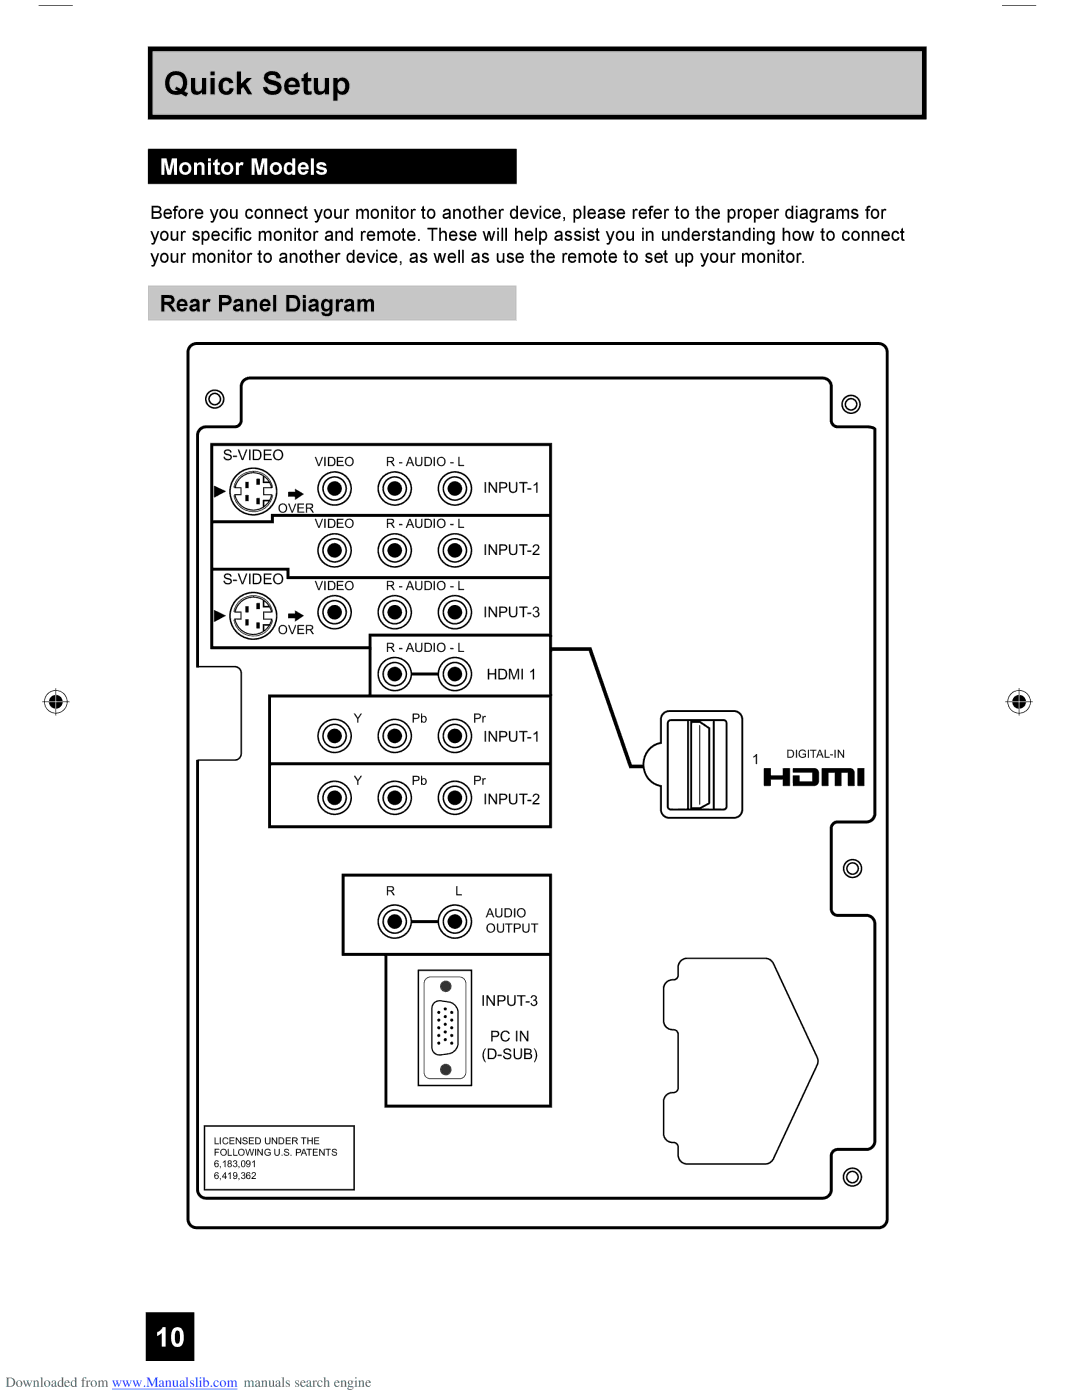 JVC HD-61G587 manual Monitor Models, Rear Panel Diagram 